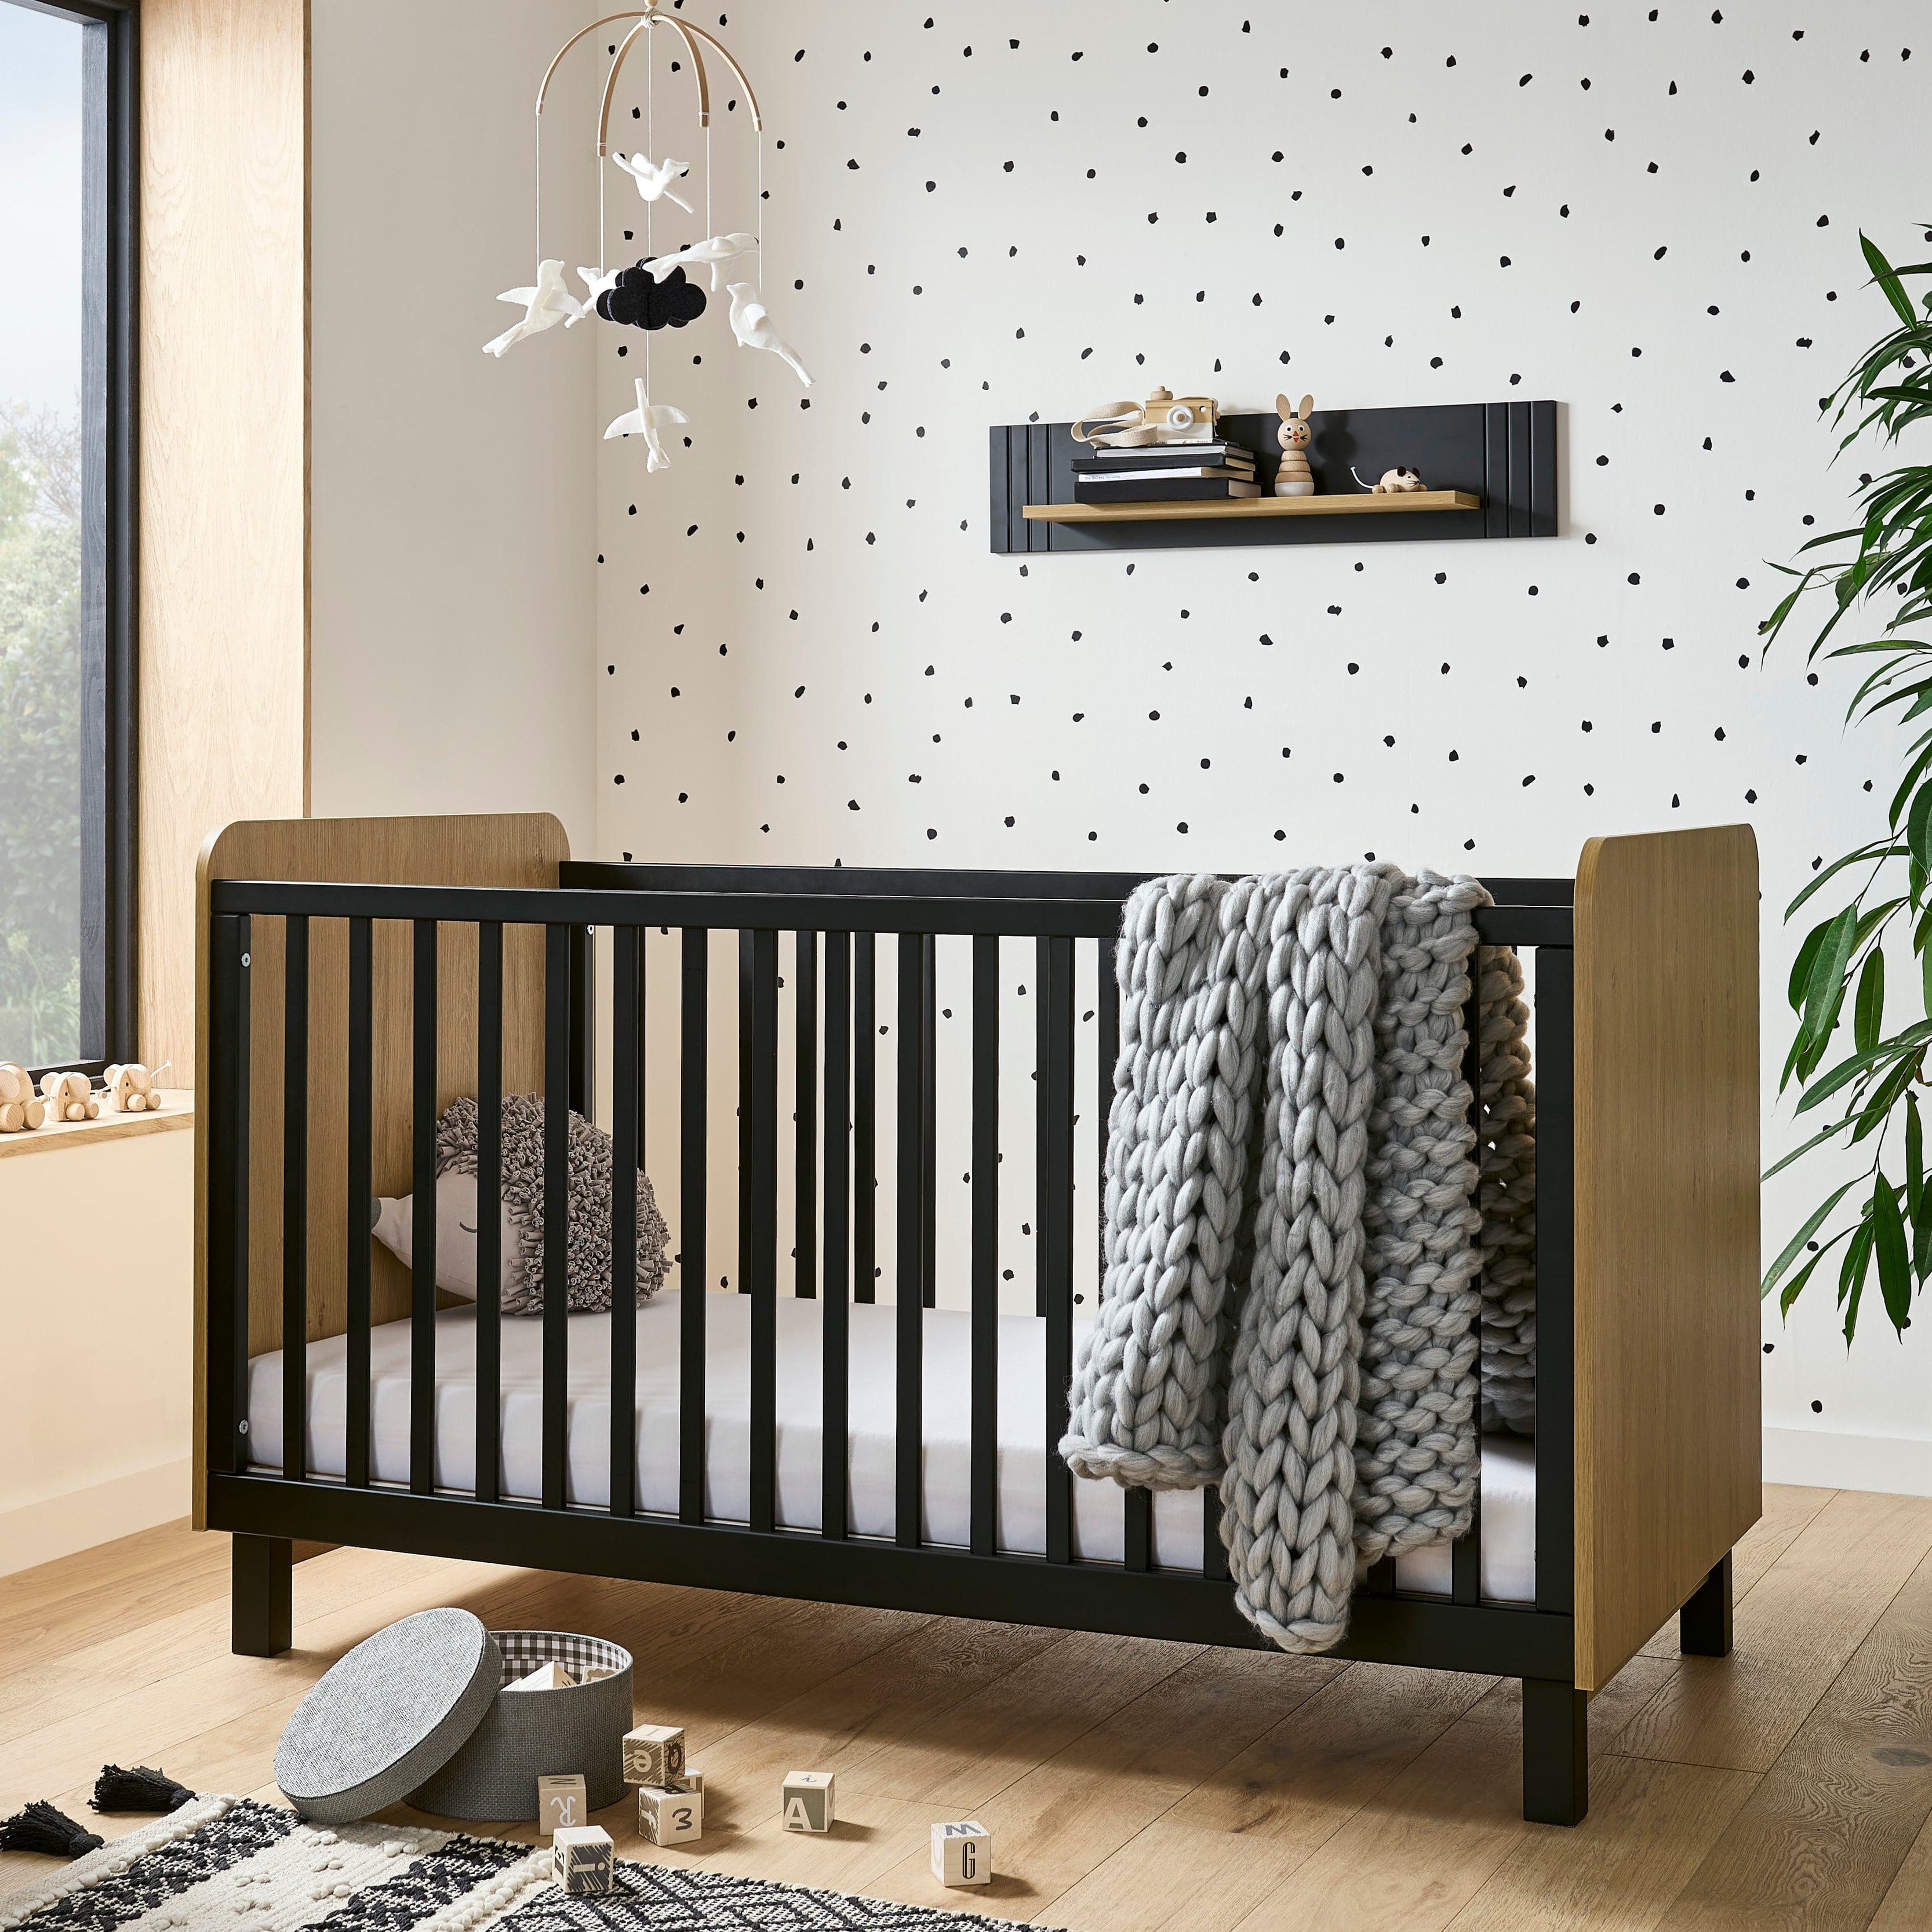 Cuddleco Rafi 4 Piece Nursery Furniture Set - Oak & Black - For Your Little One